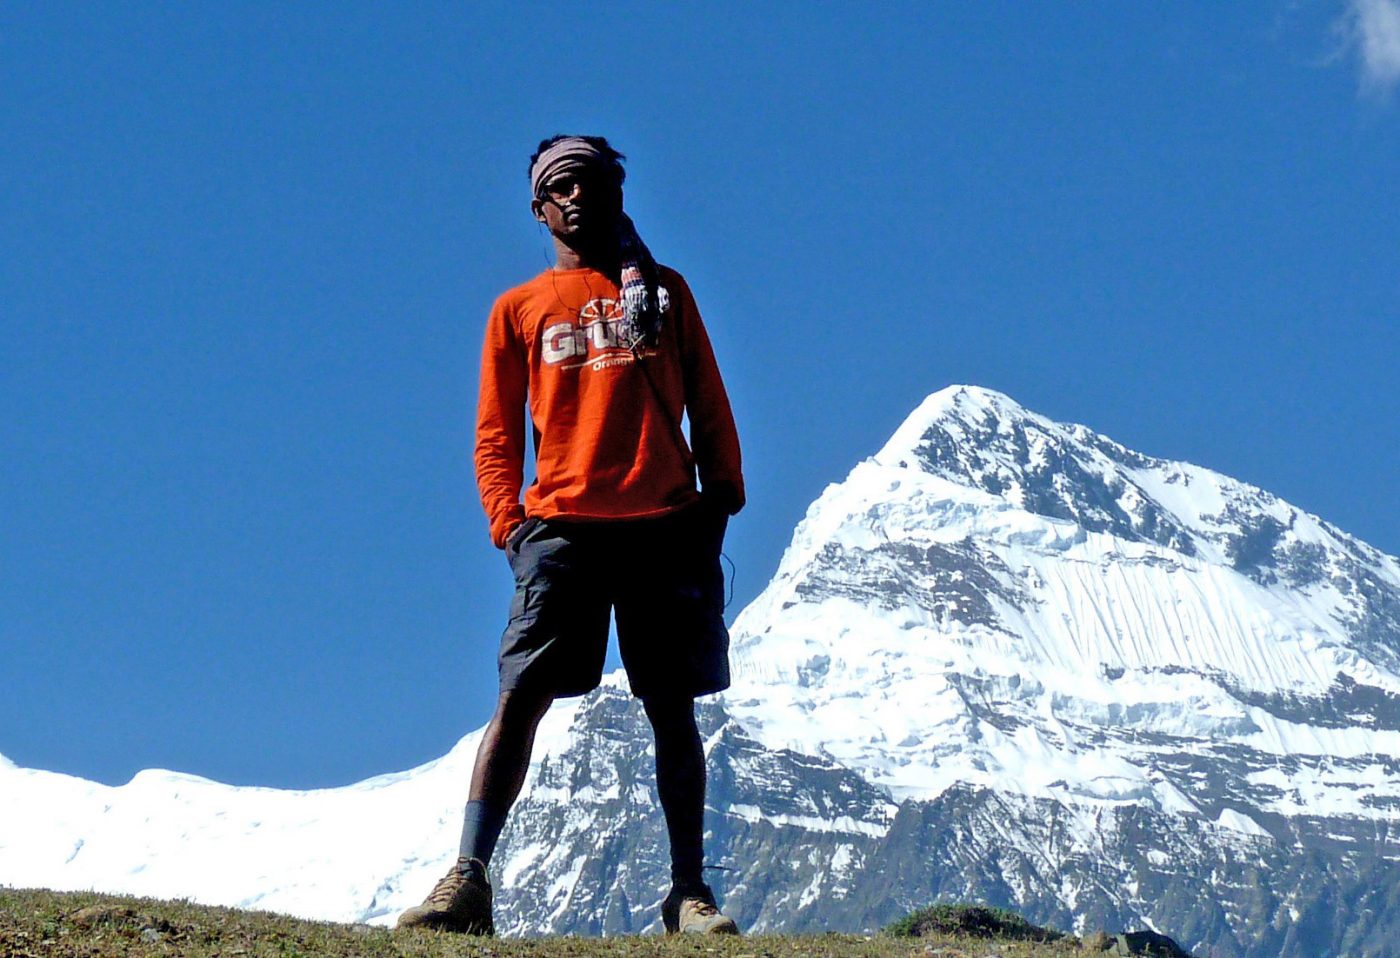 Mohammad trekking on the Annapurna Circuit in Nepal.